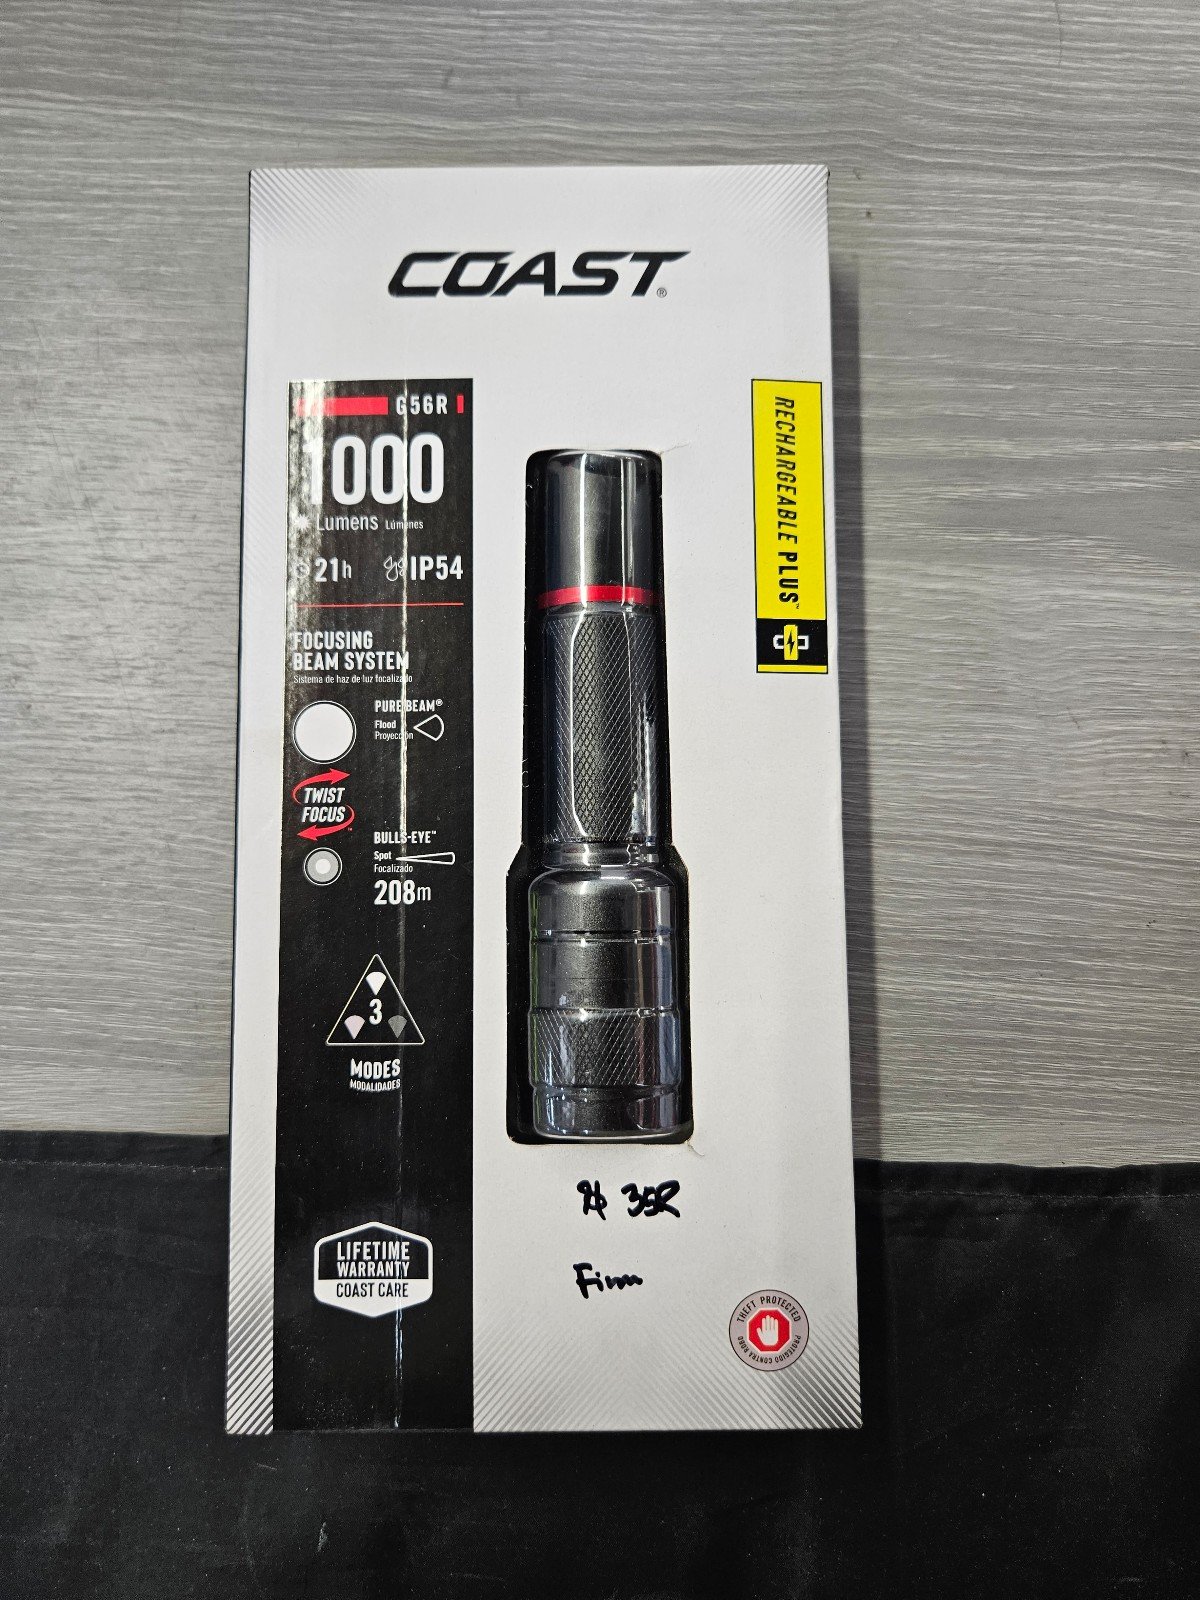 Coast
G56R 1000 Lumens Alkaline Battery Dual Power Handheld Flashlight kM5emavnm